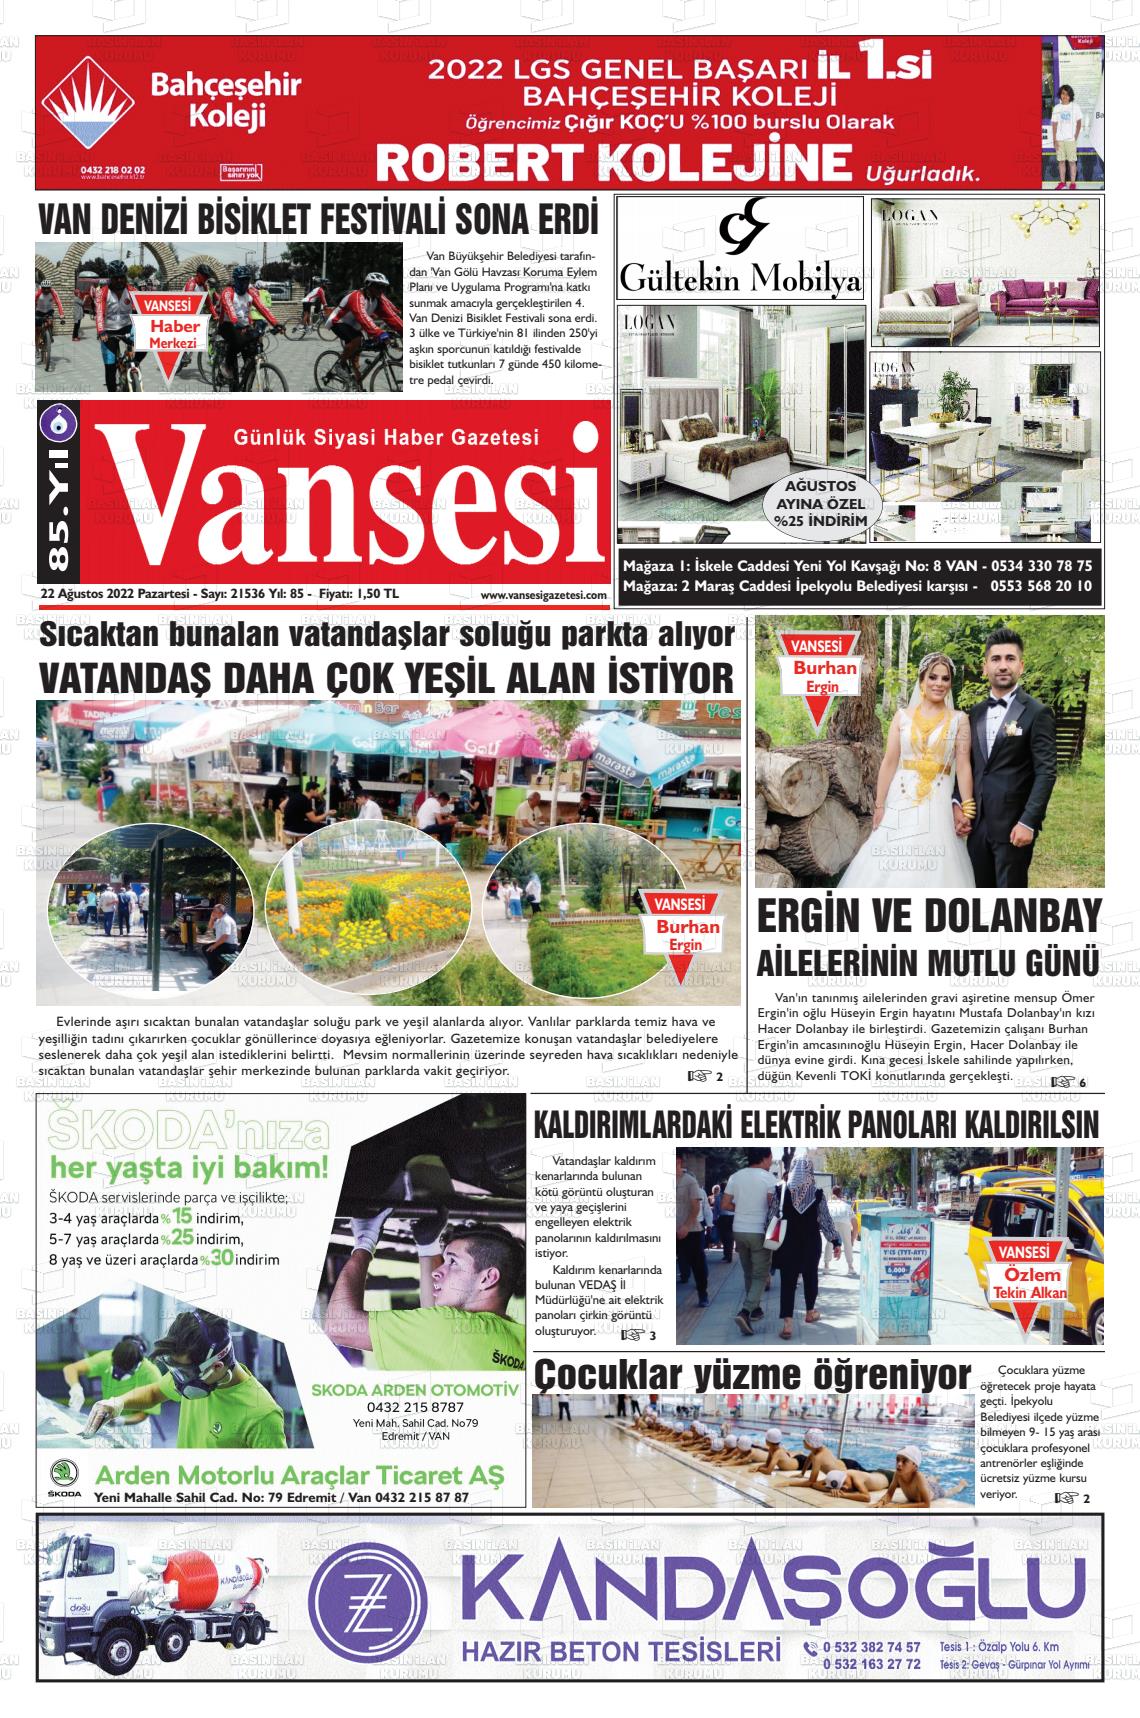 22 Ağustos 2022 Vansesi Gazete Manşeti